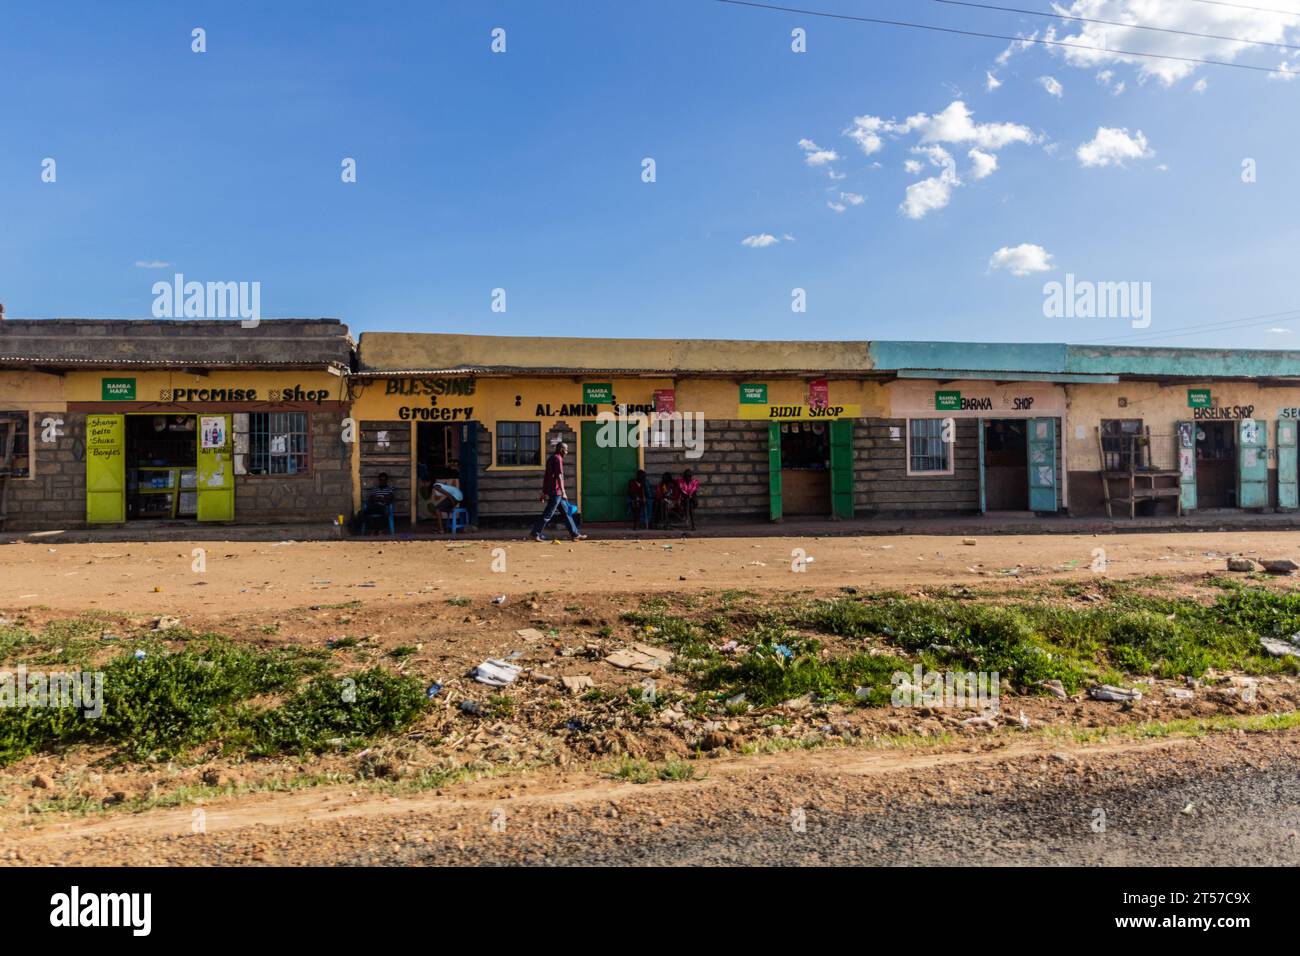 NKOILALE, KENIA - 18. FEBRUAR 2020: Verschiedene Geschäfte im Dorf Nkoilale, Kenia Stockfoto